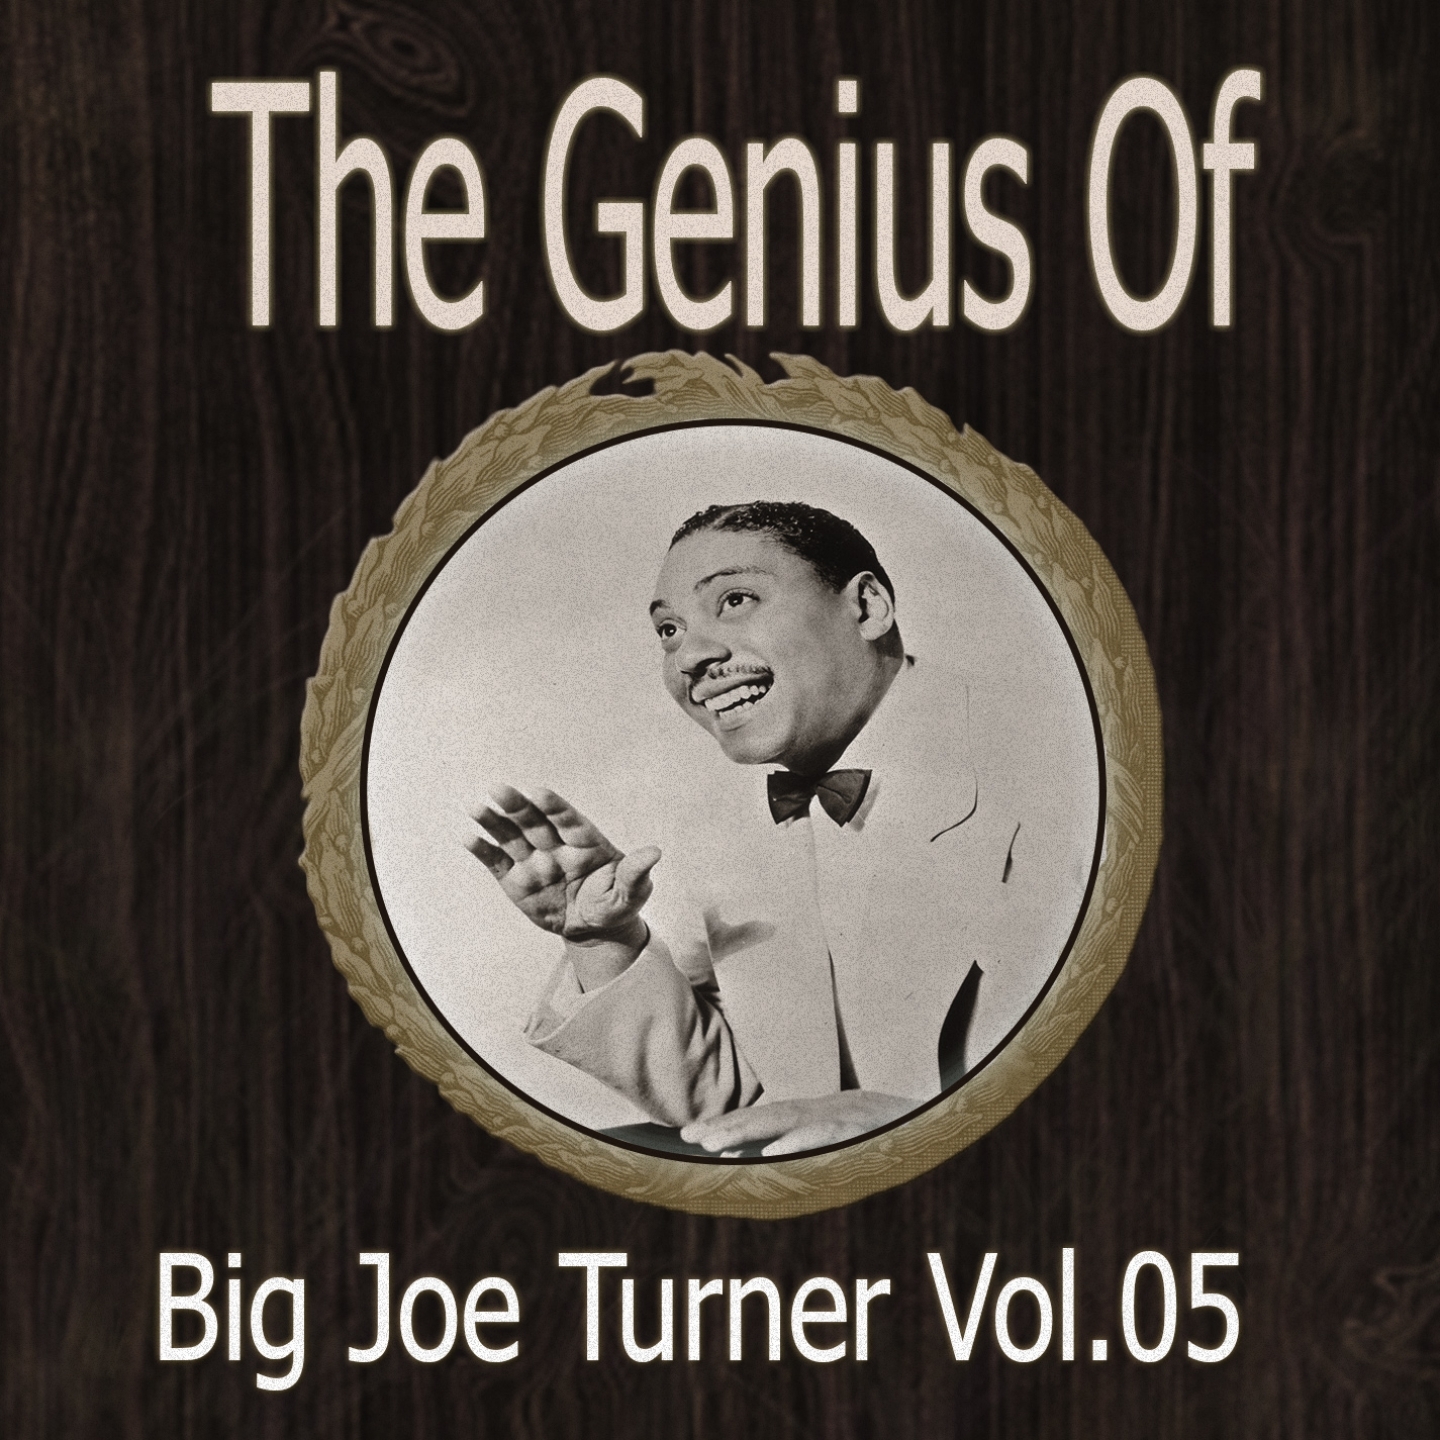 The Genius of Big Joe Turner Vol 05